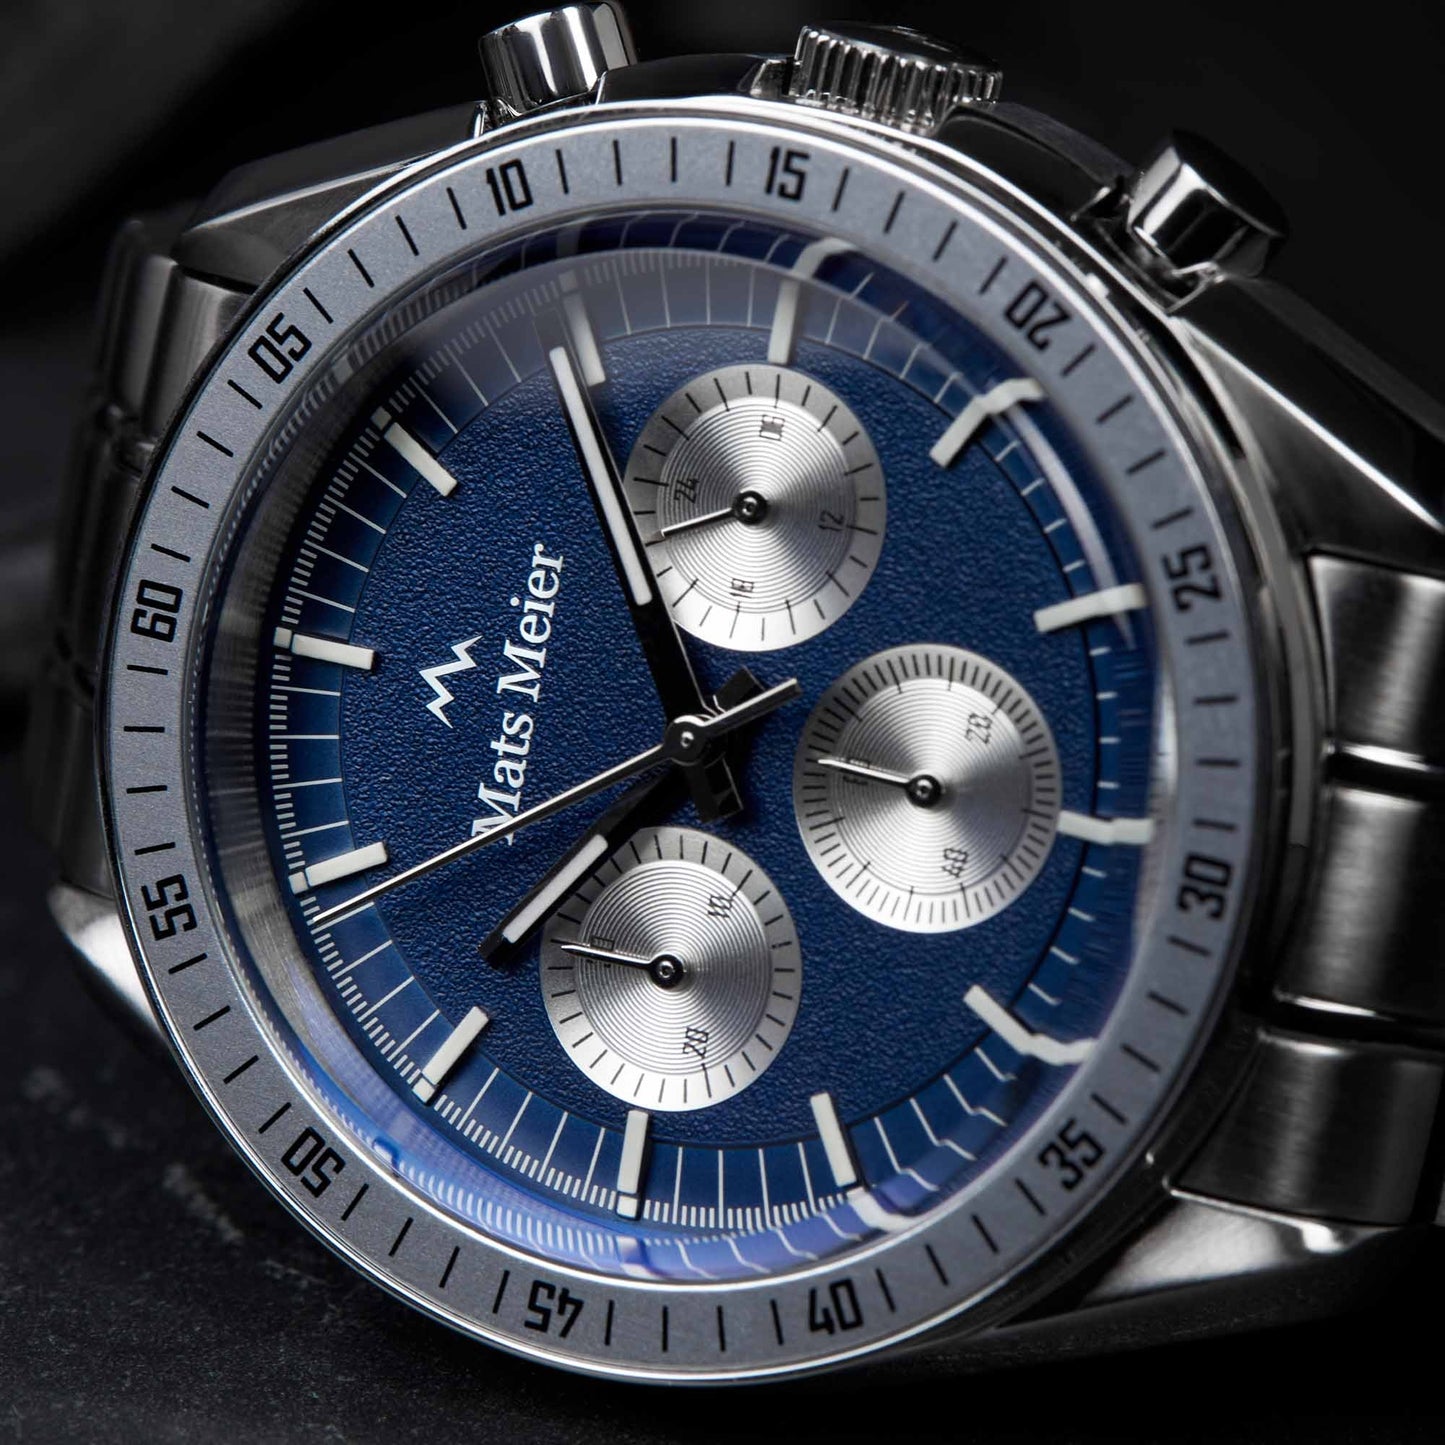 Arosa Racing cronografo orologio da uomo color argento e blu